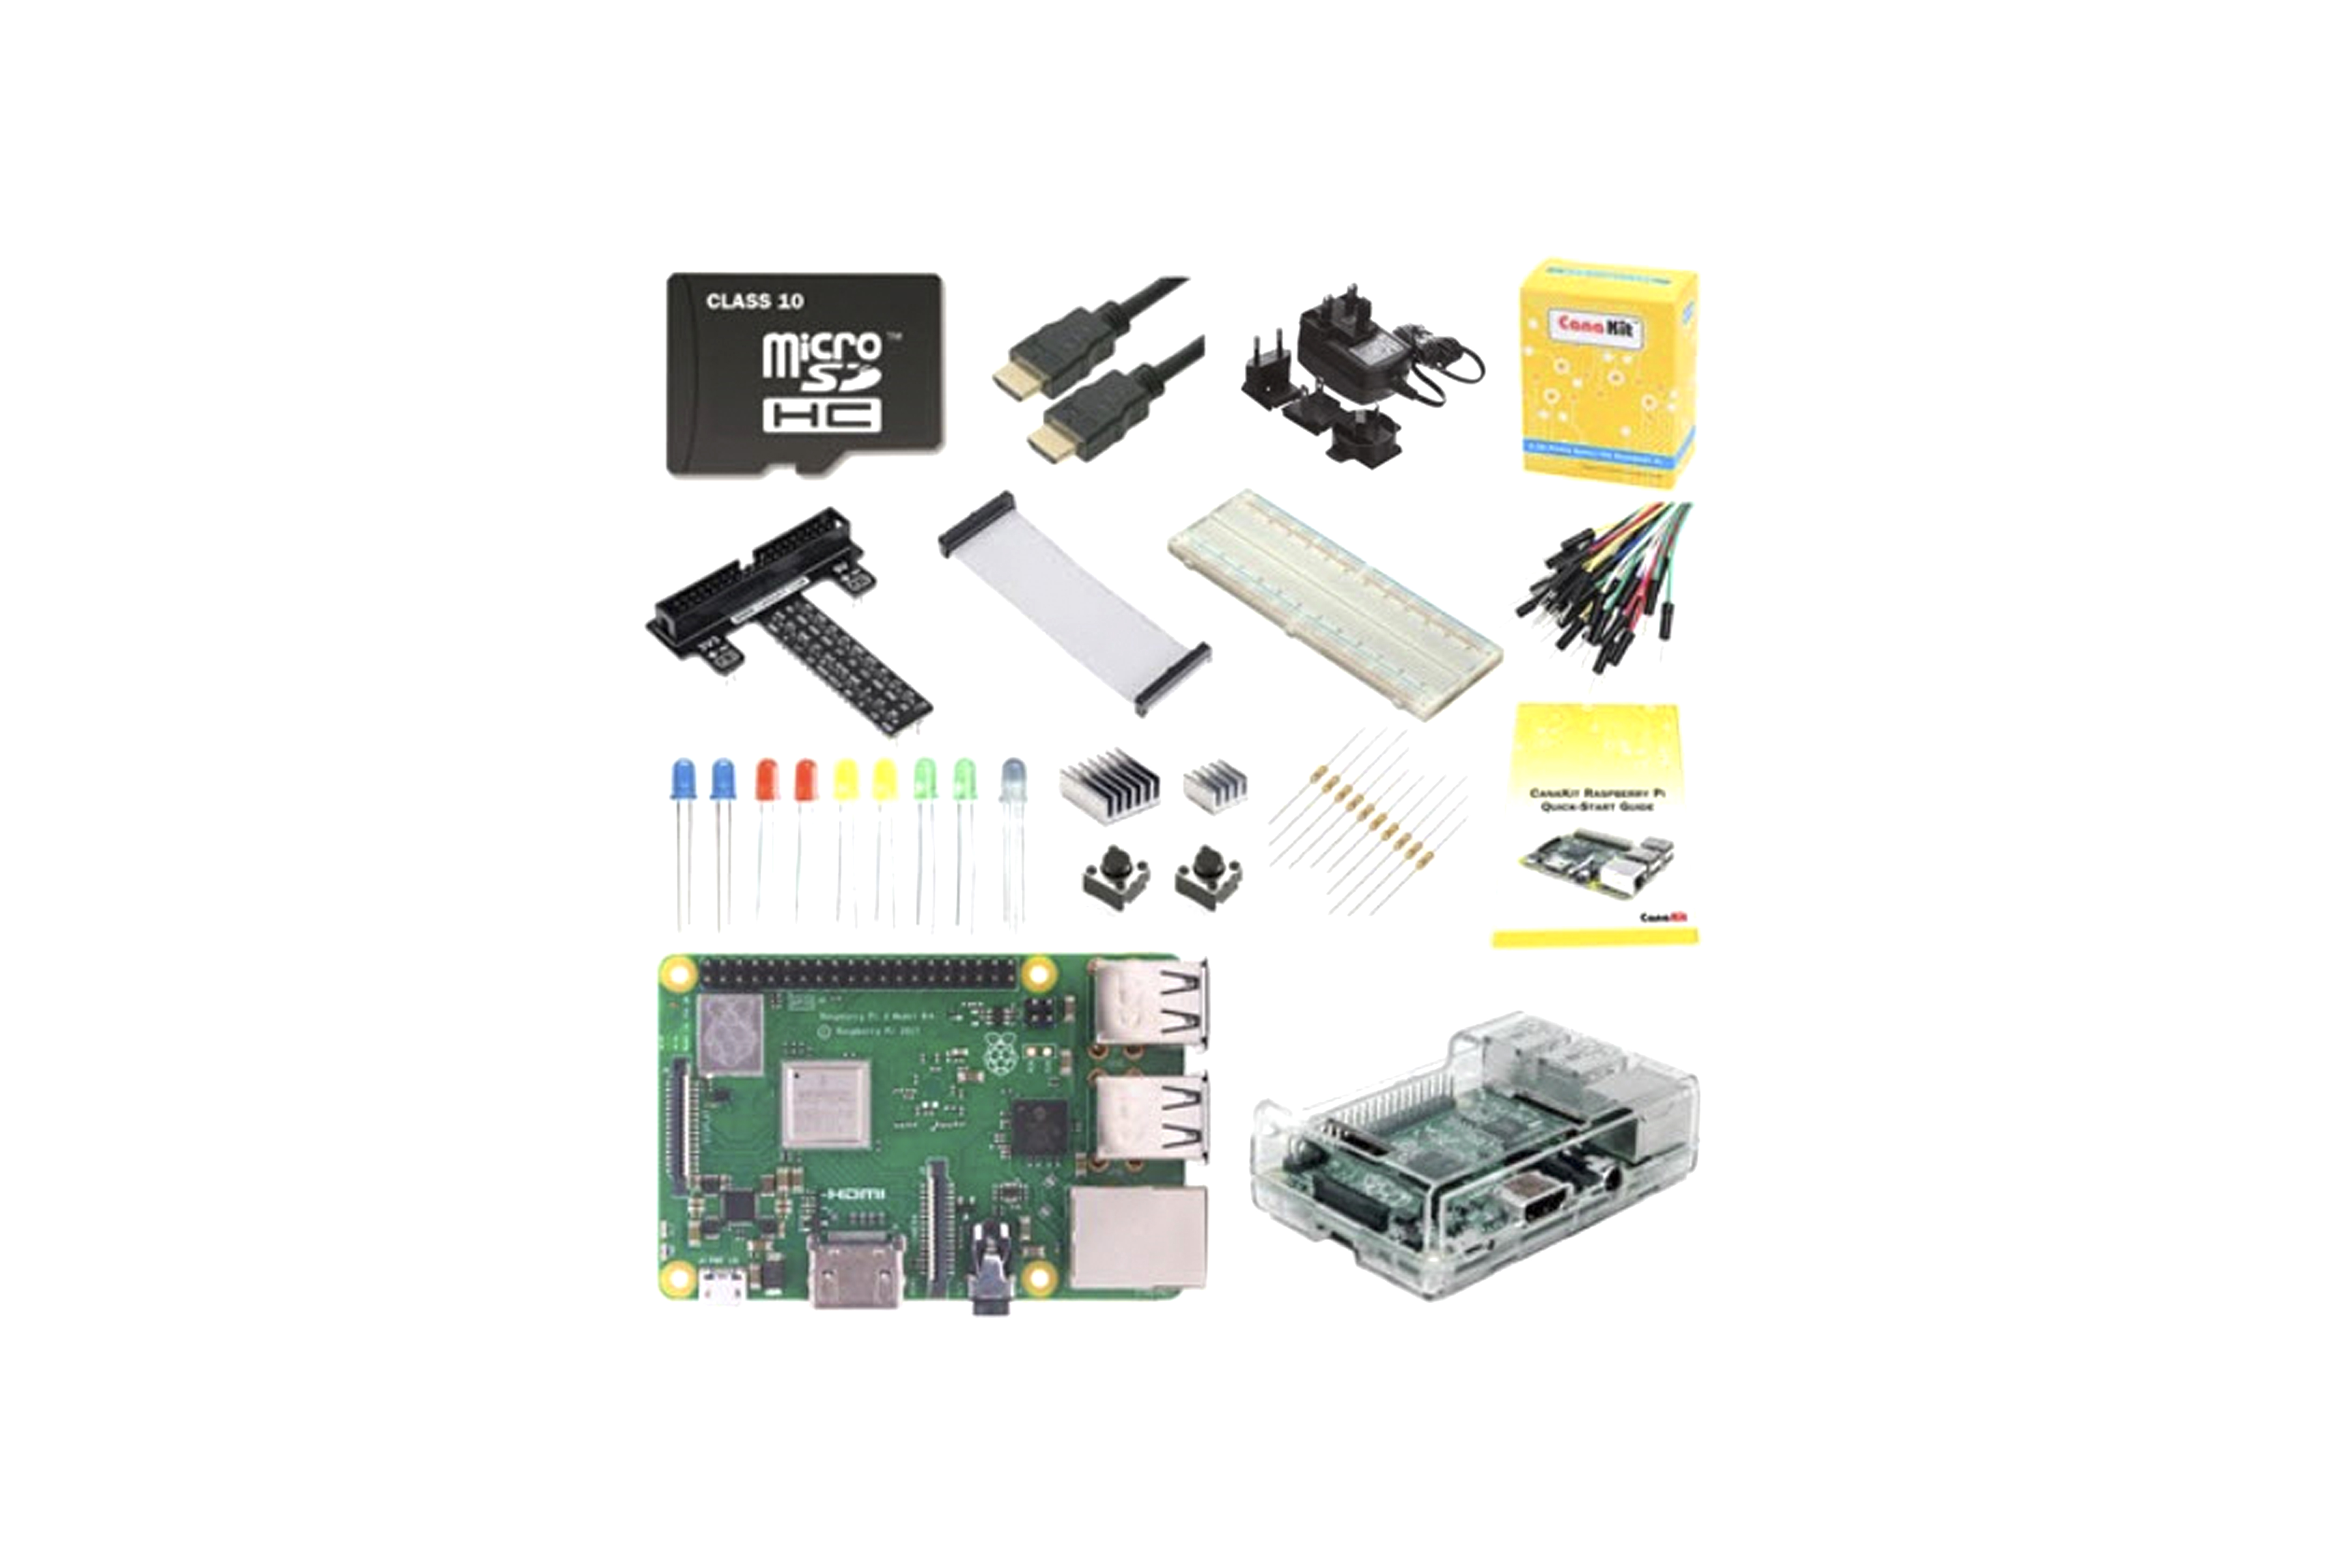 Raspberry Pi 3 Ultimate Starter Kit - 32 GB Edition